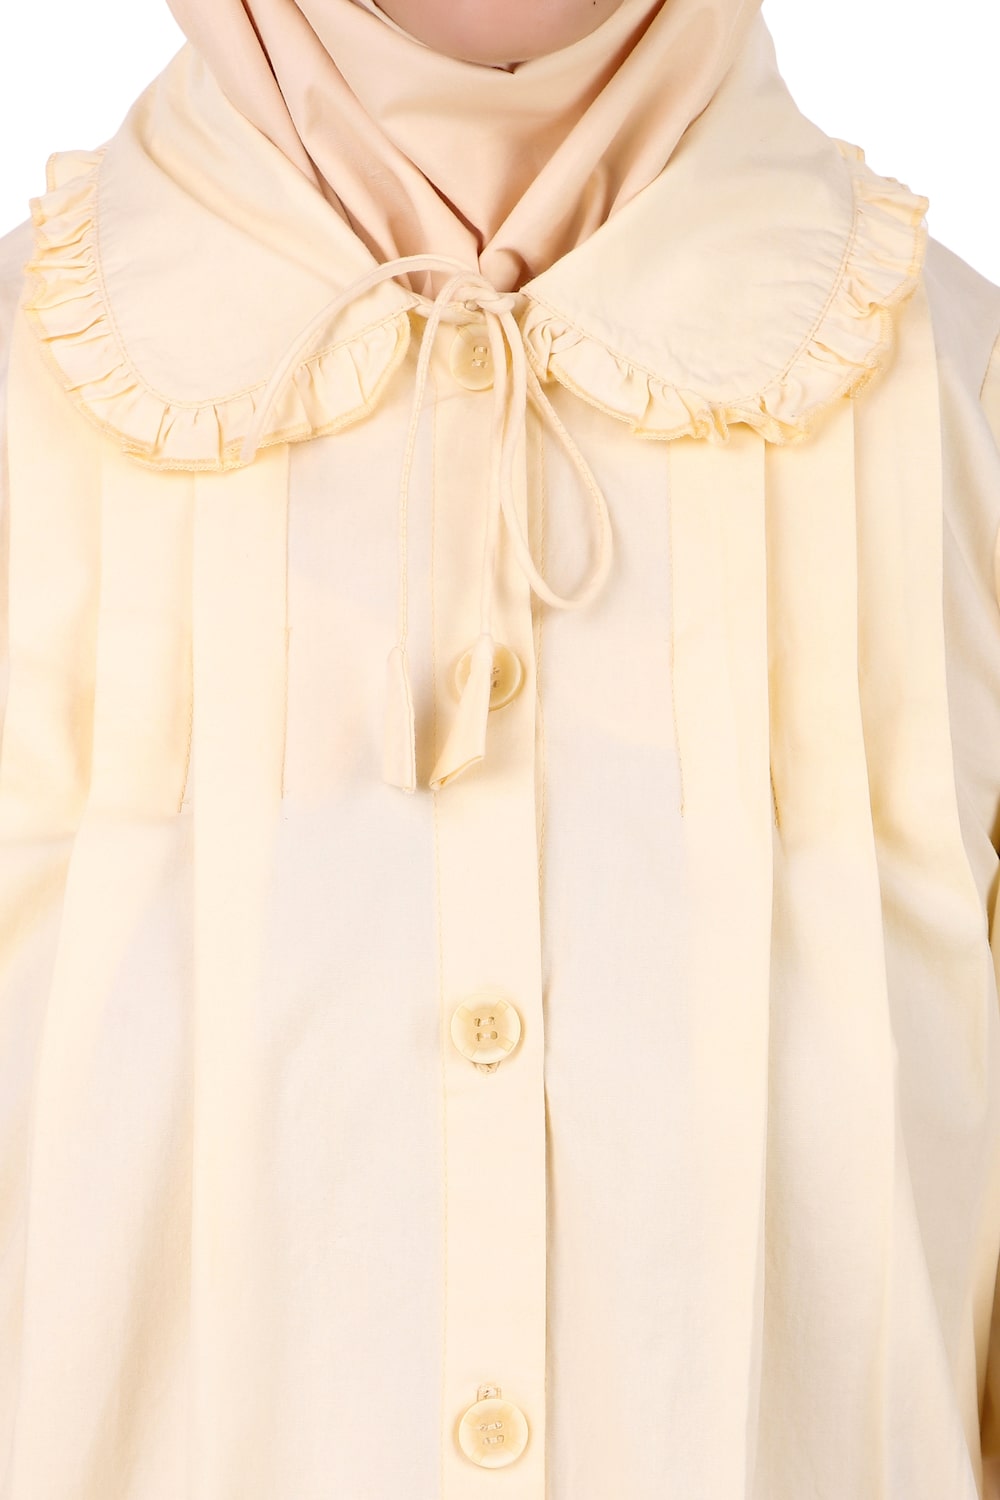 Front Open Cotton Cream Color Abaya